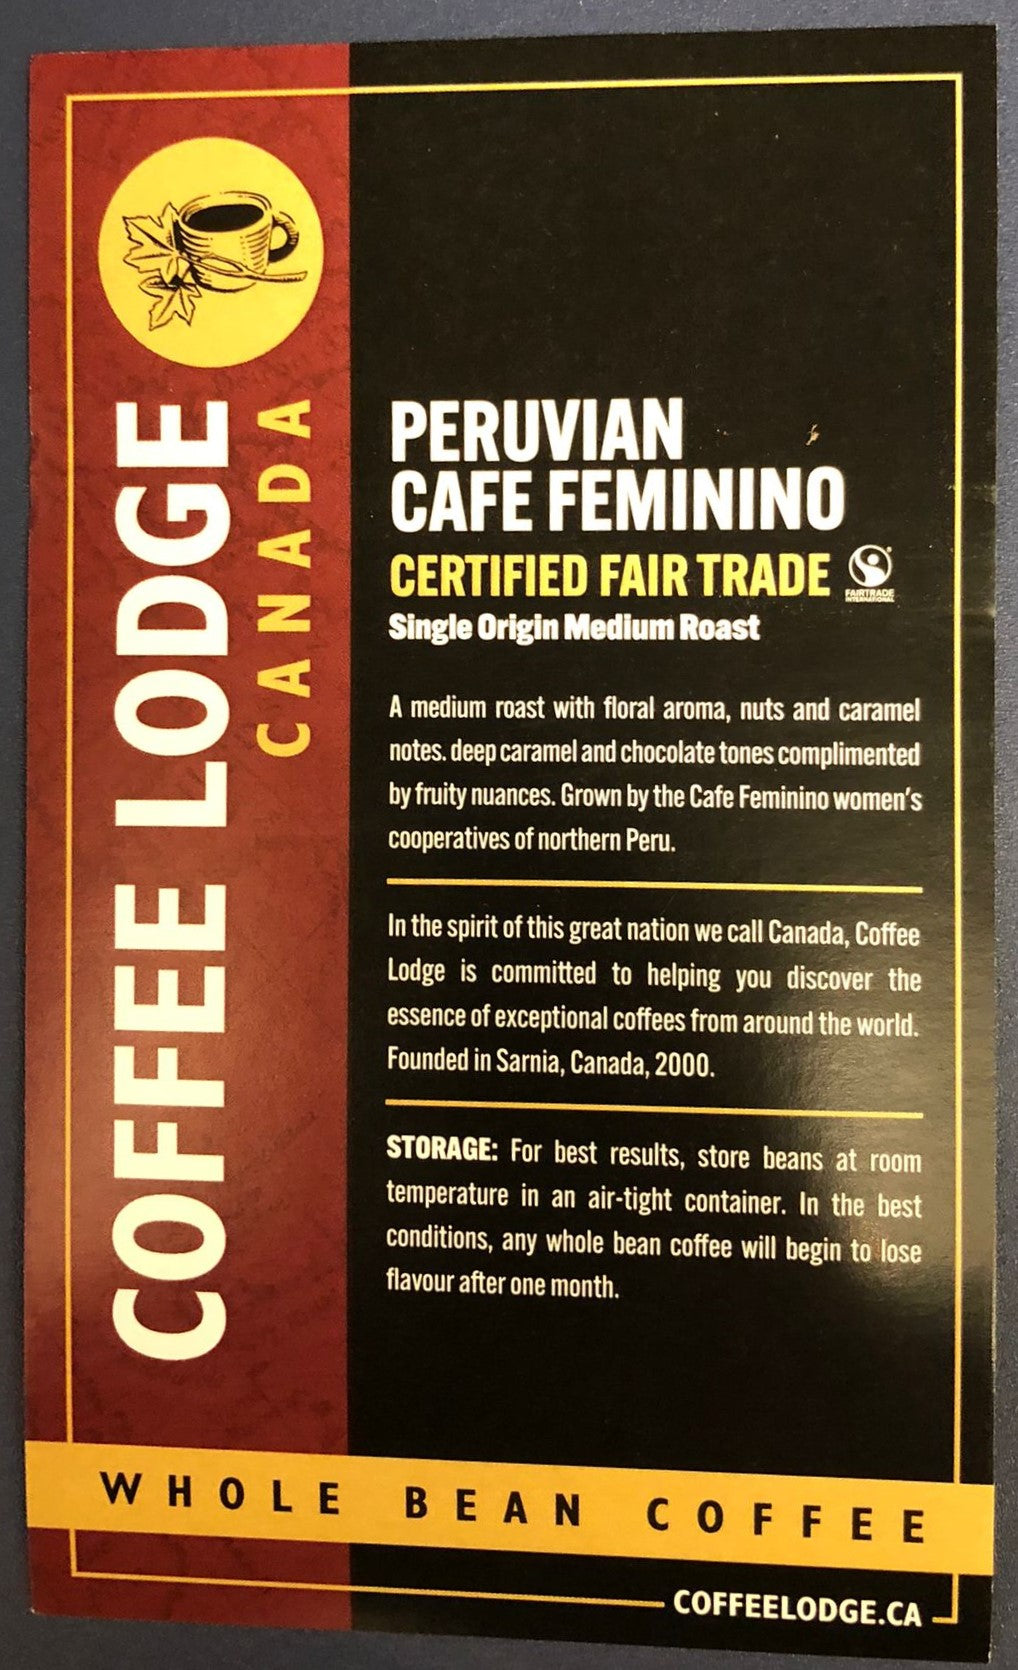 Peruvian Cafe Feminino Certified Fair Trade